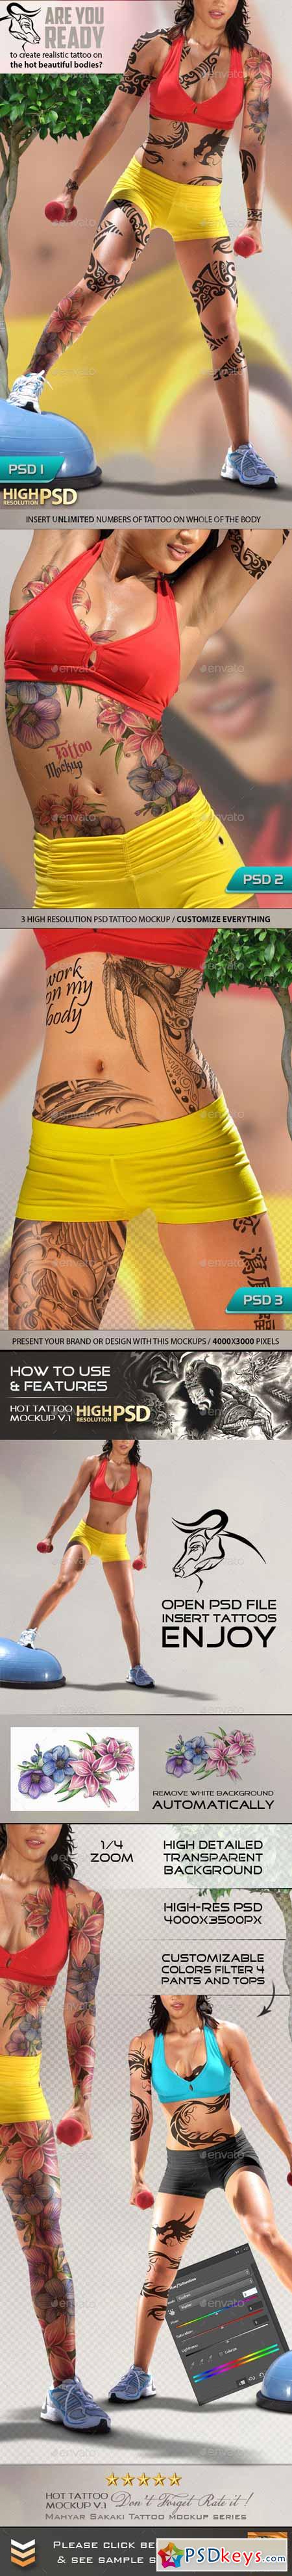 Hot tattoo on beautiful bodies Mockup V.1 9688938